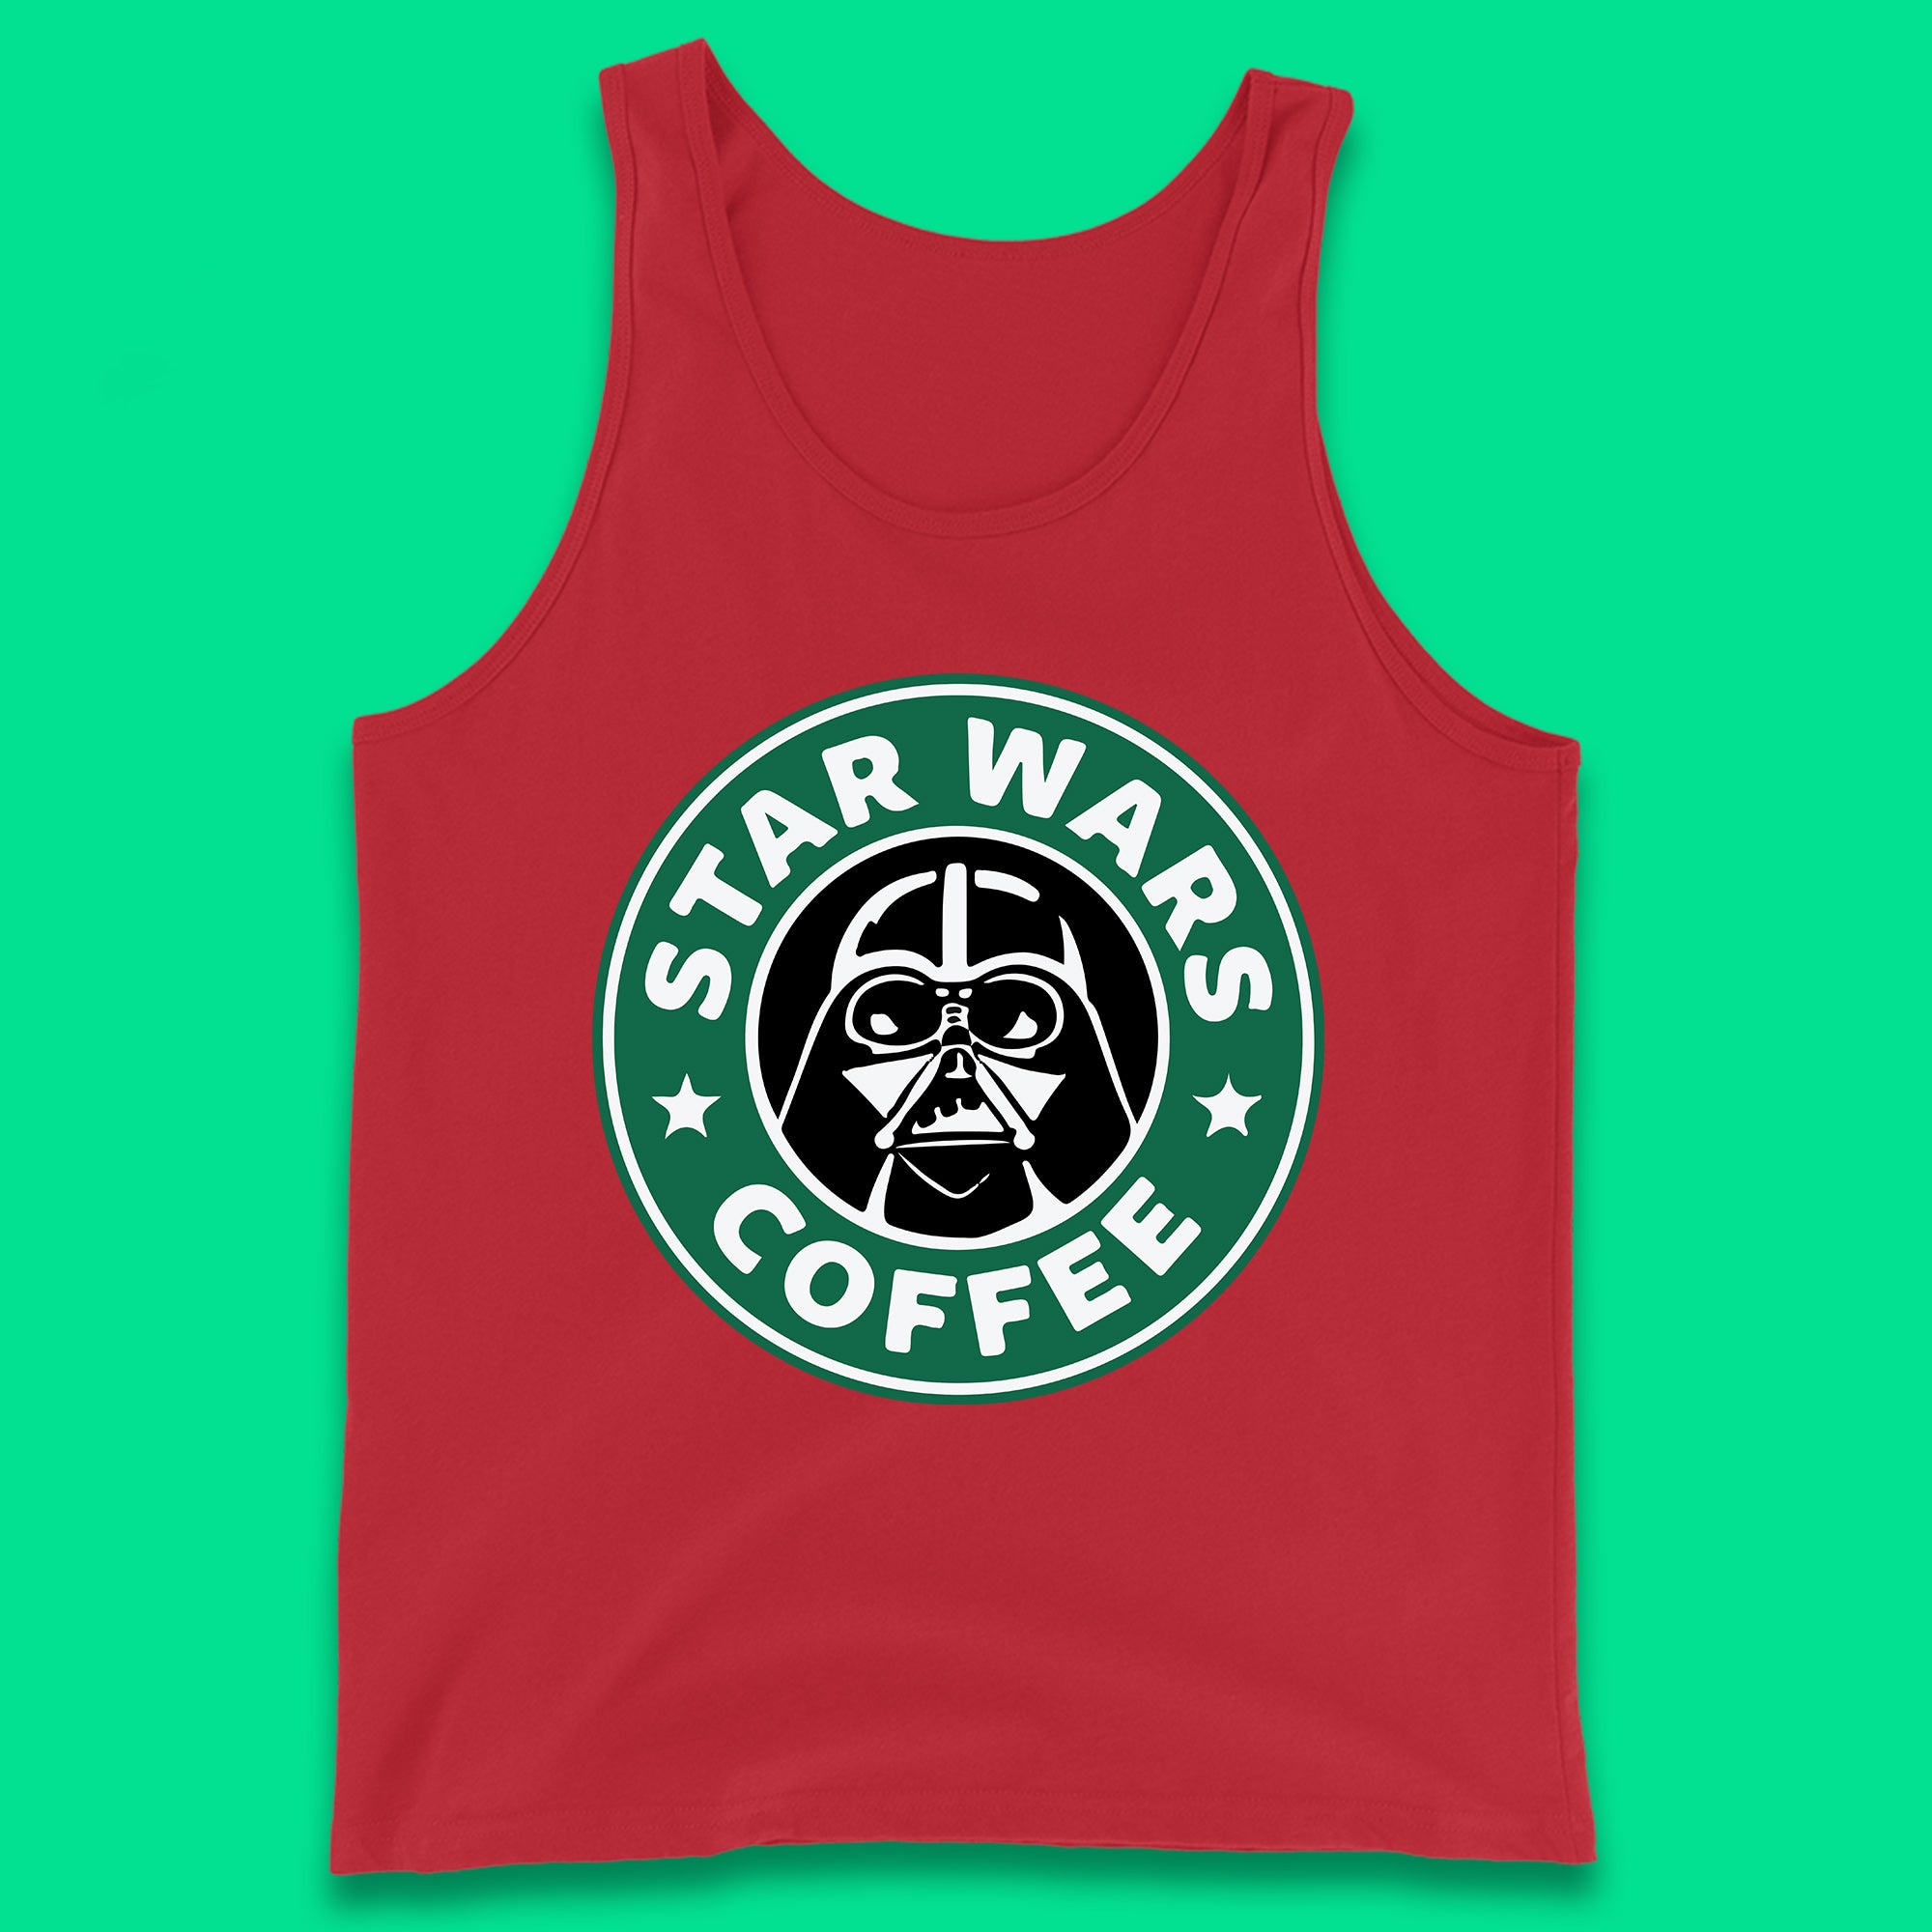 Sci-fi Action Adventure Movie Character Darth Vader Star Wars Coffee Starbucks Coffee Spoof Star Wars 46th Anniversary Tank Top